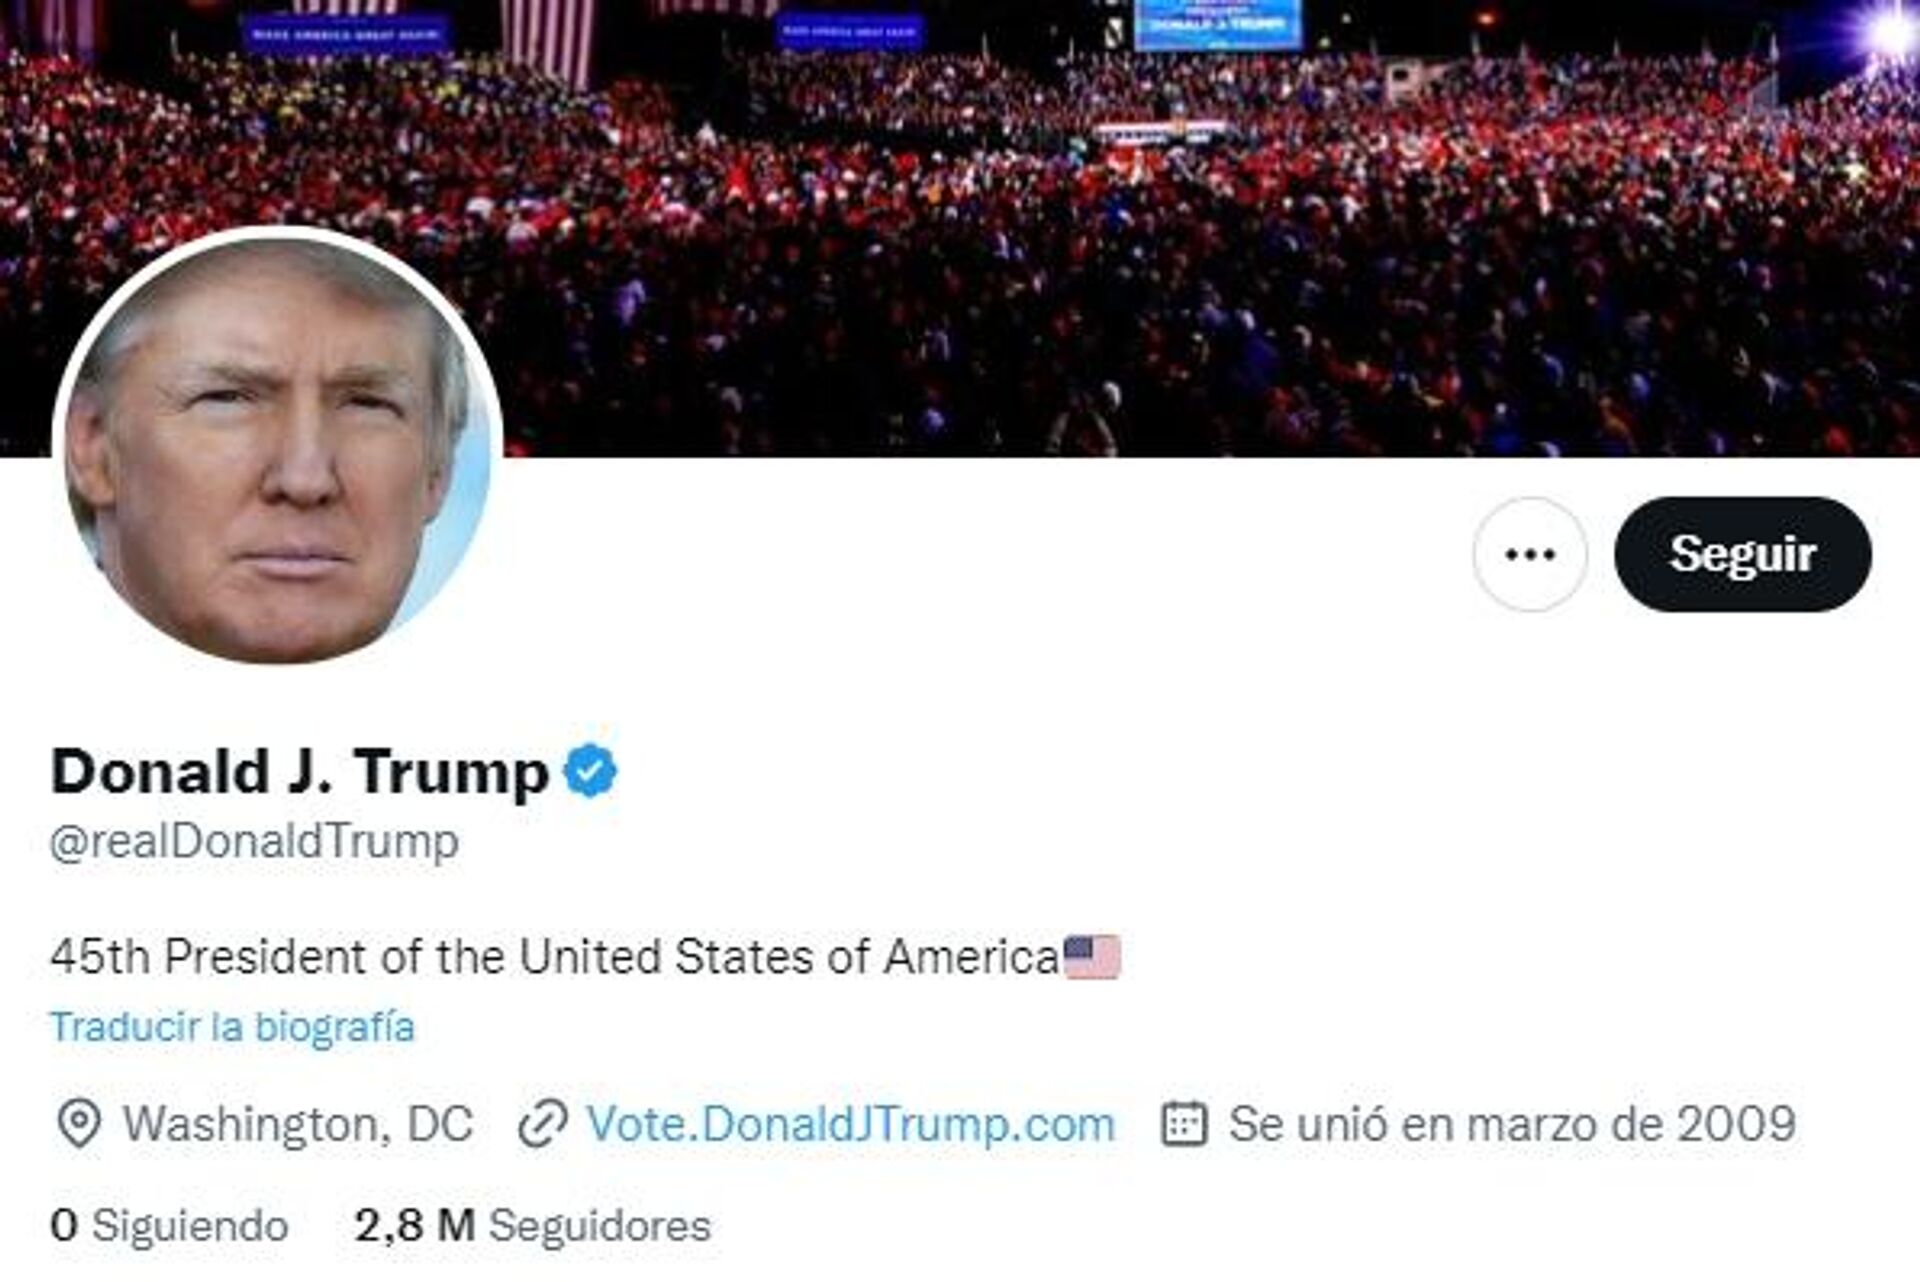 La cuenta restablecida de Donald Trump en Twitter, el 19 de noviembre de 2022 - Sputnik Mundo, 1920, 20.11.2022